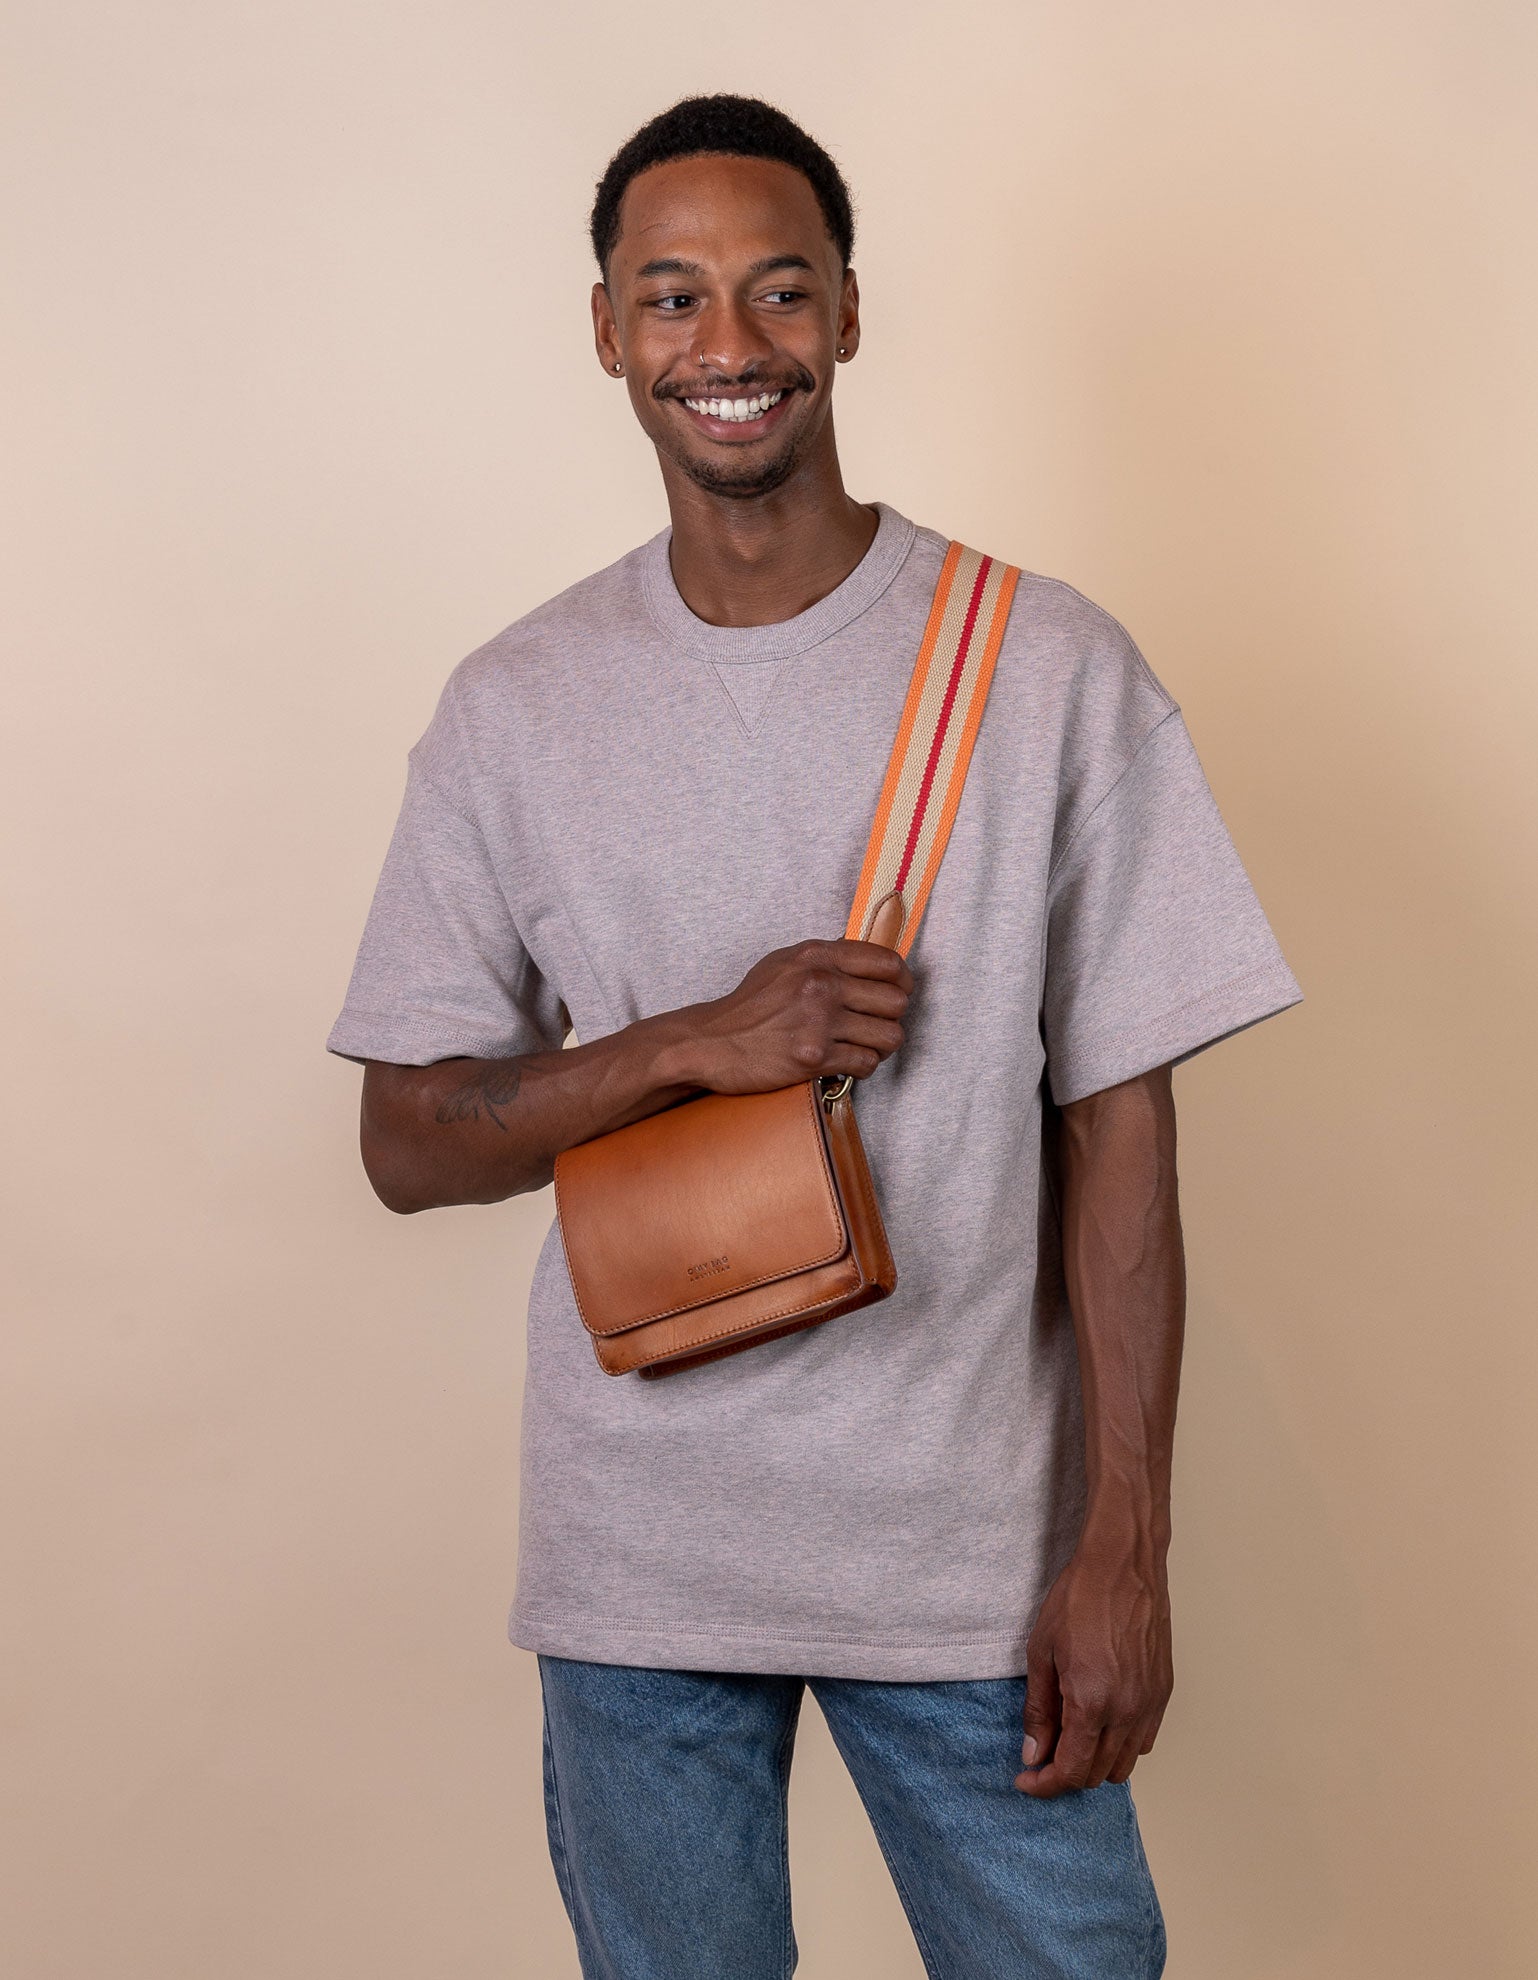 Orange & red adjustable webbing strap with cognac leather details. Male model product image.